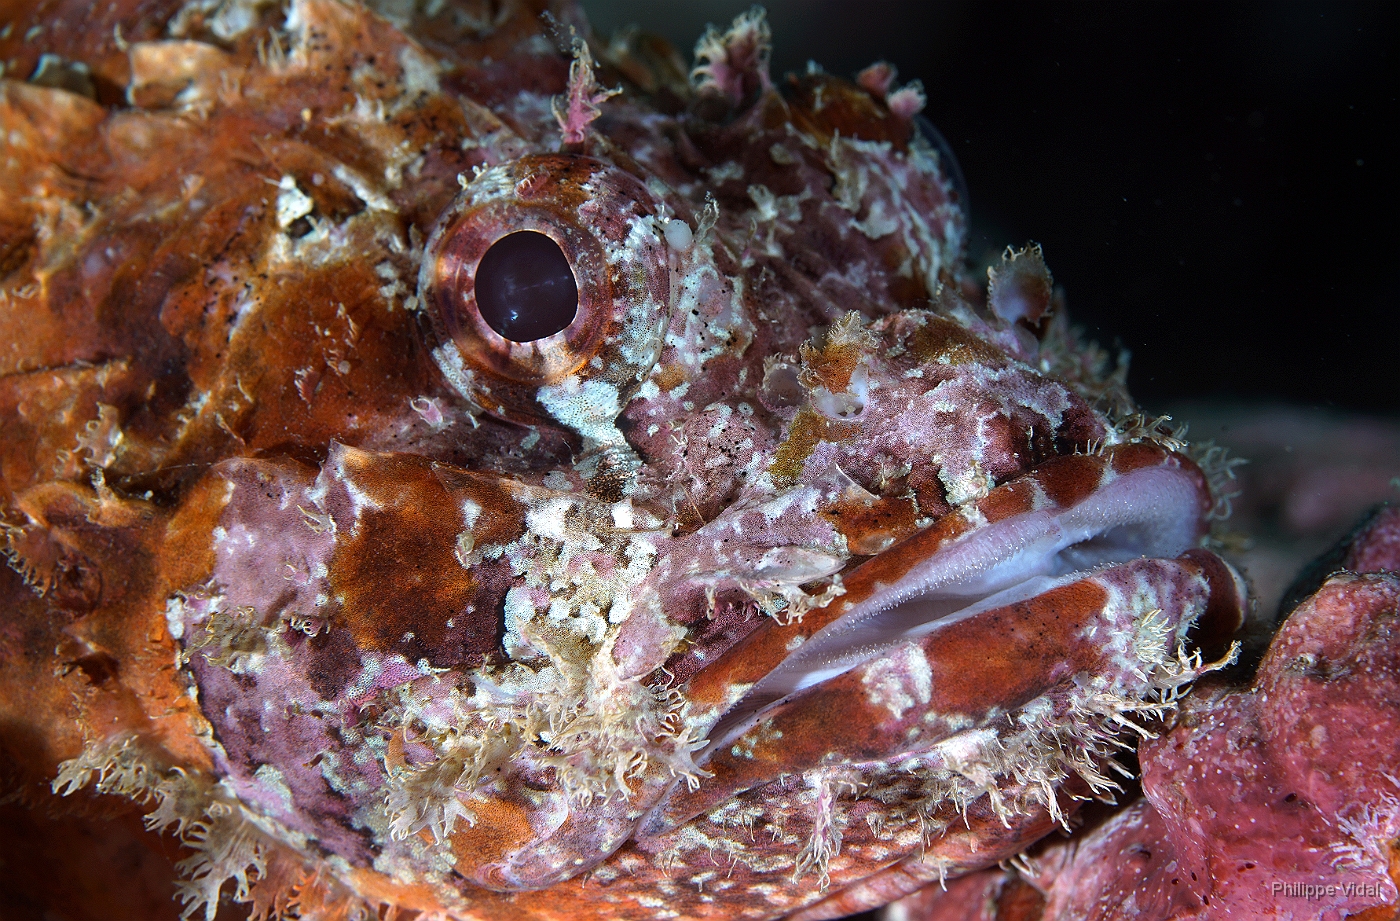 Birmanie - Mergui - 2018 - DSC03025  - Tasseled scorpionfish - Poisson scorpion a houpe - Scorpaenopsis oxycephala.JPG